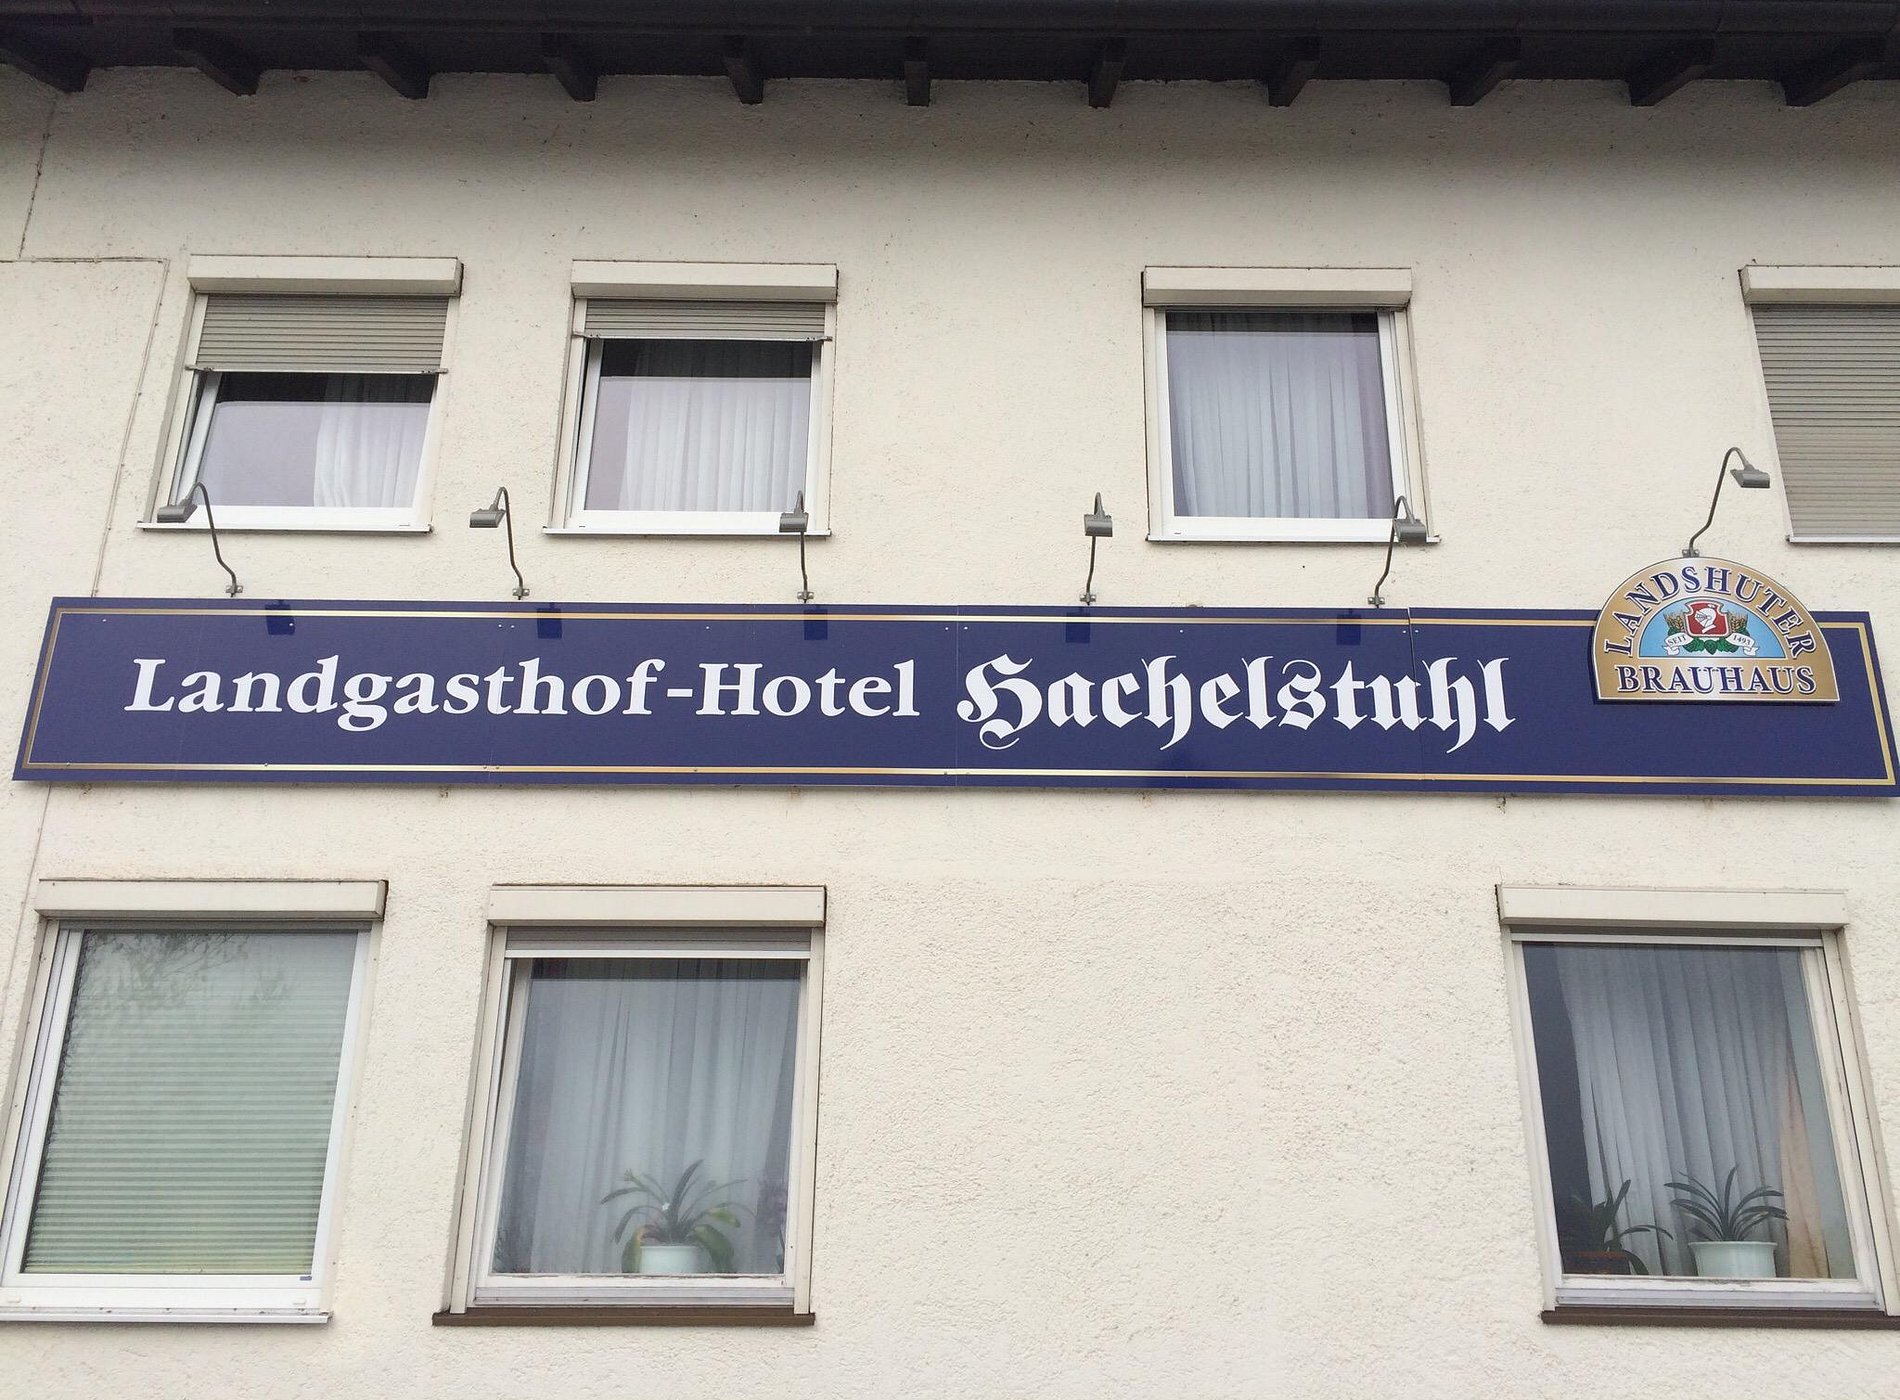 Landgasthof-Hotel Hachelstuhl image